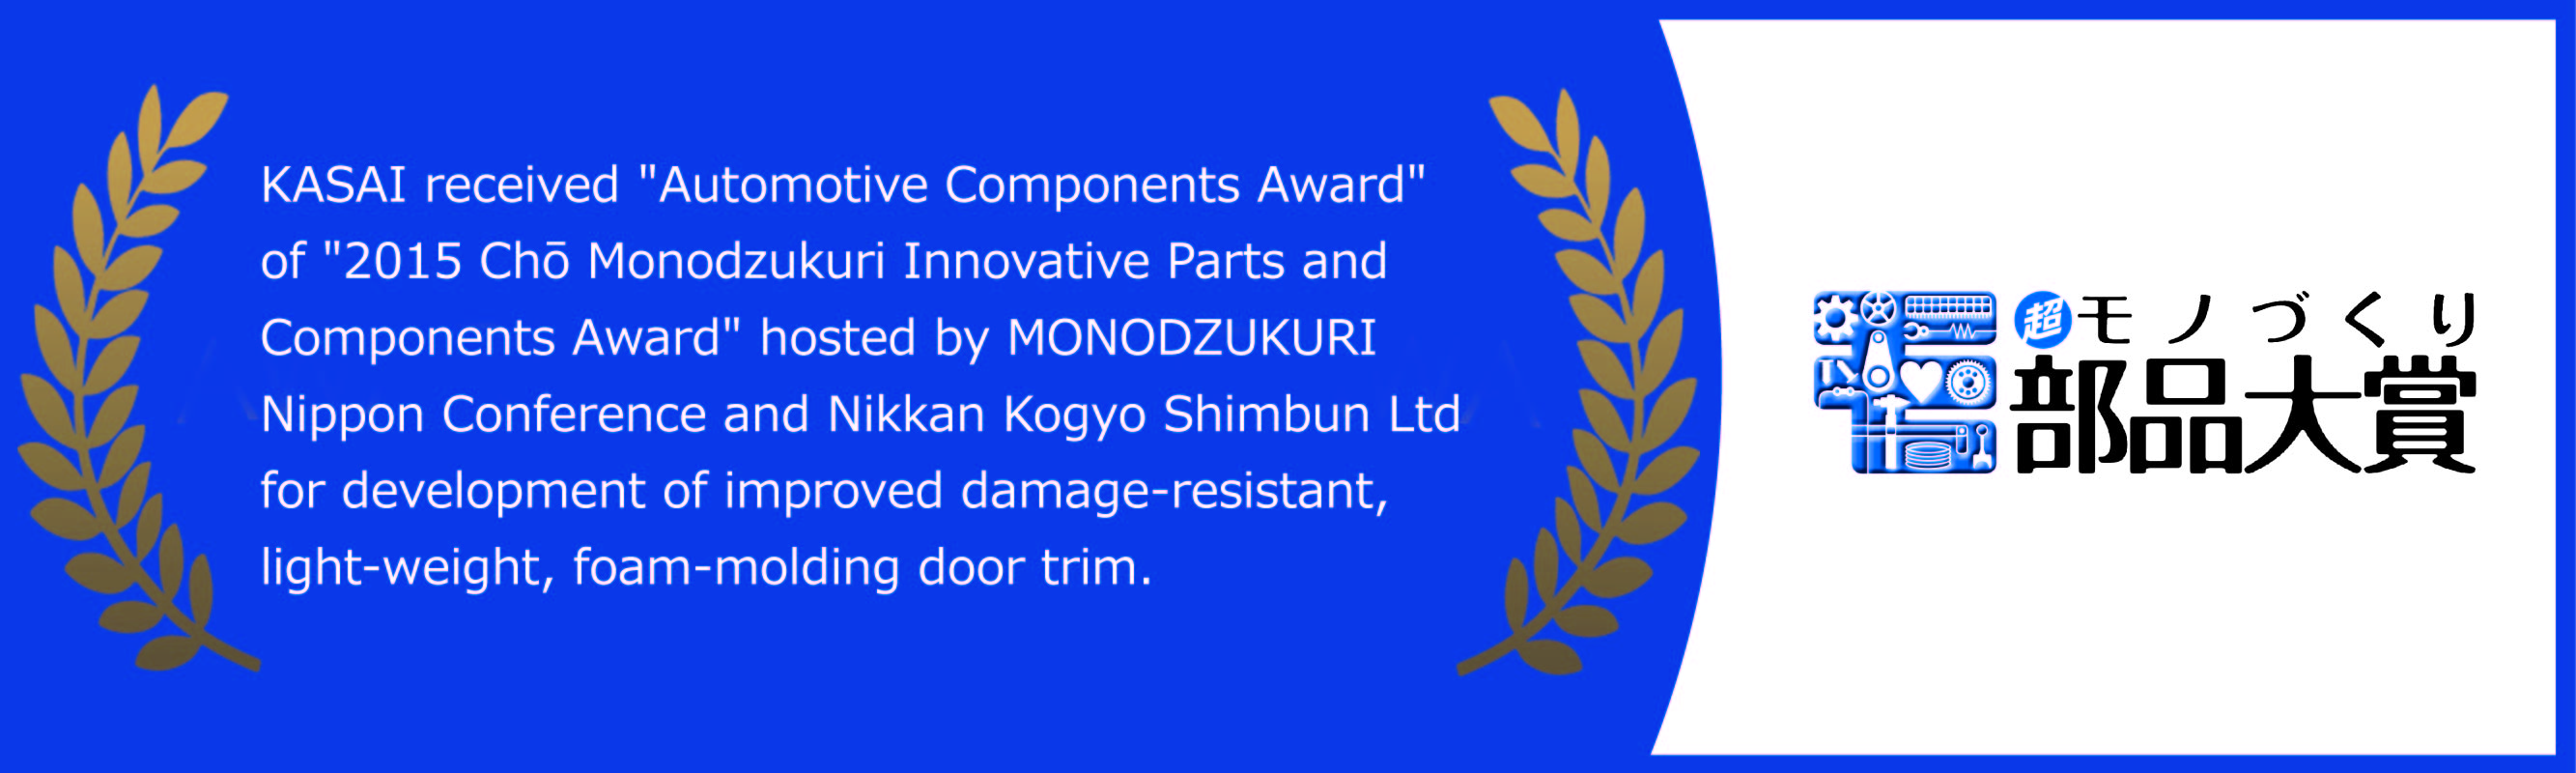 KASAI received 'Automotive Components Award' of '2015 Chō Monodzukuri Innovative Parts and Components Award' hosted by MONODZUKURI Nippon Conference and Nikkan Kogyo Shimbun Ltd for development of improved damage-resistant, light-weight, foam-molding door trim.